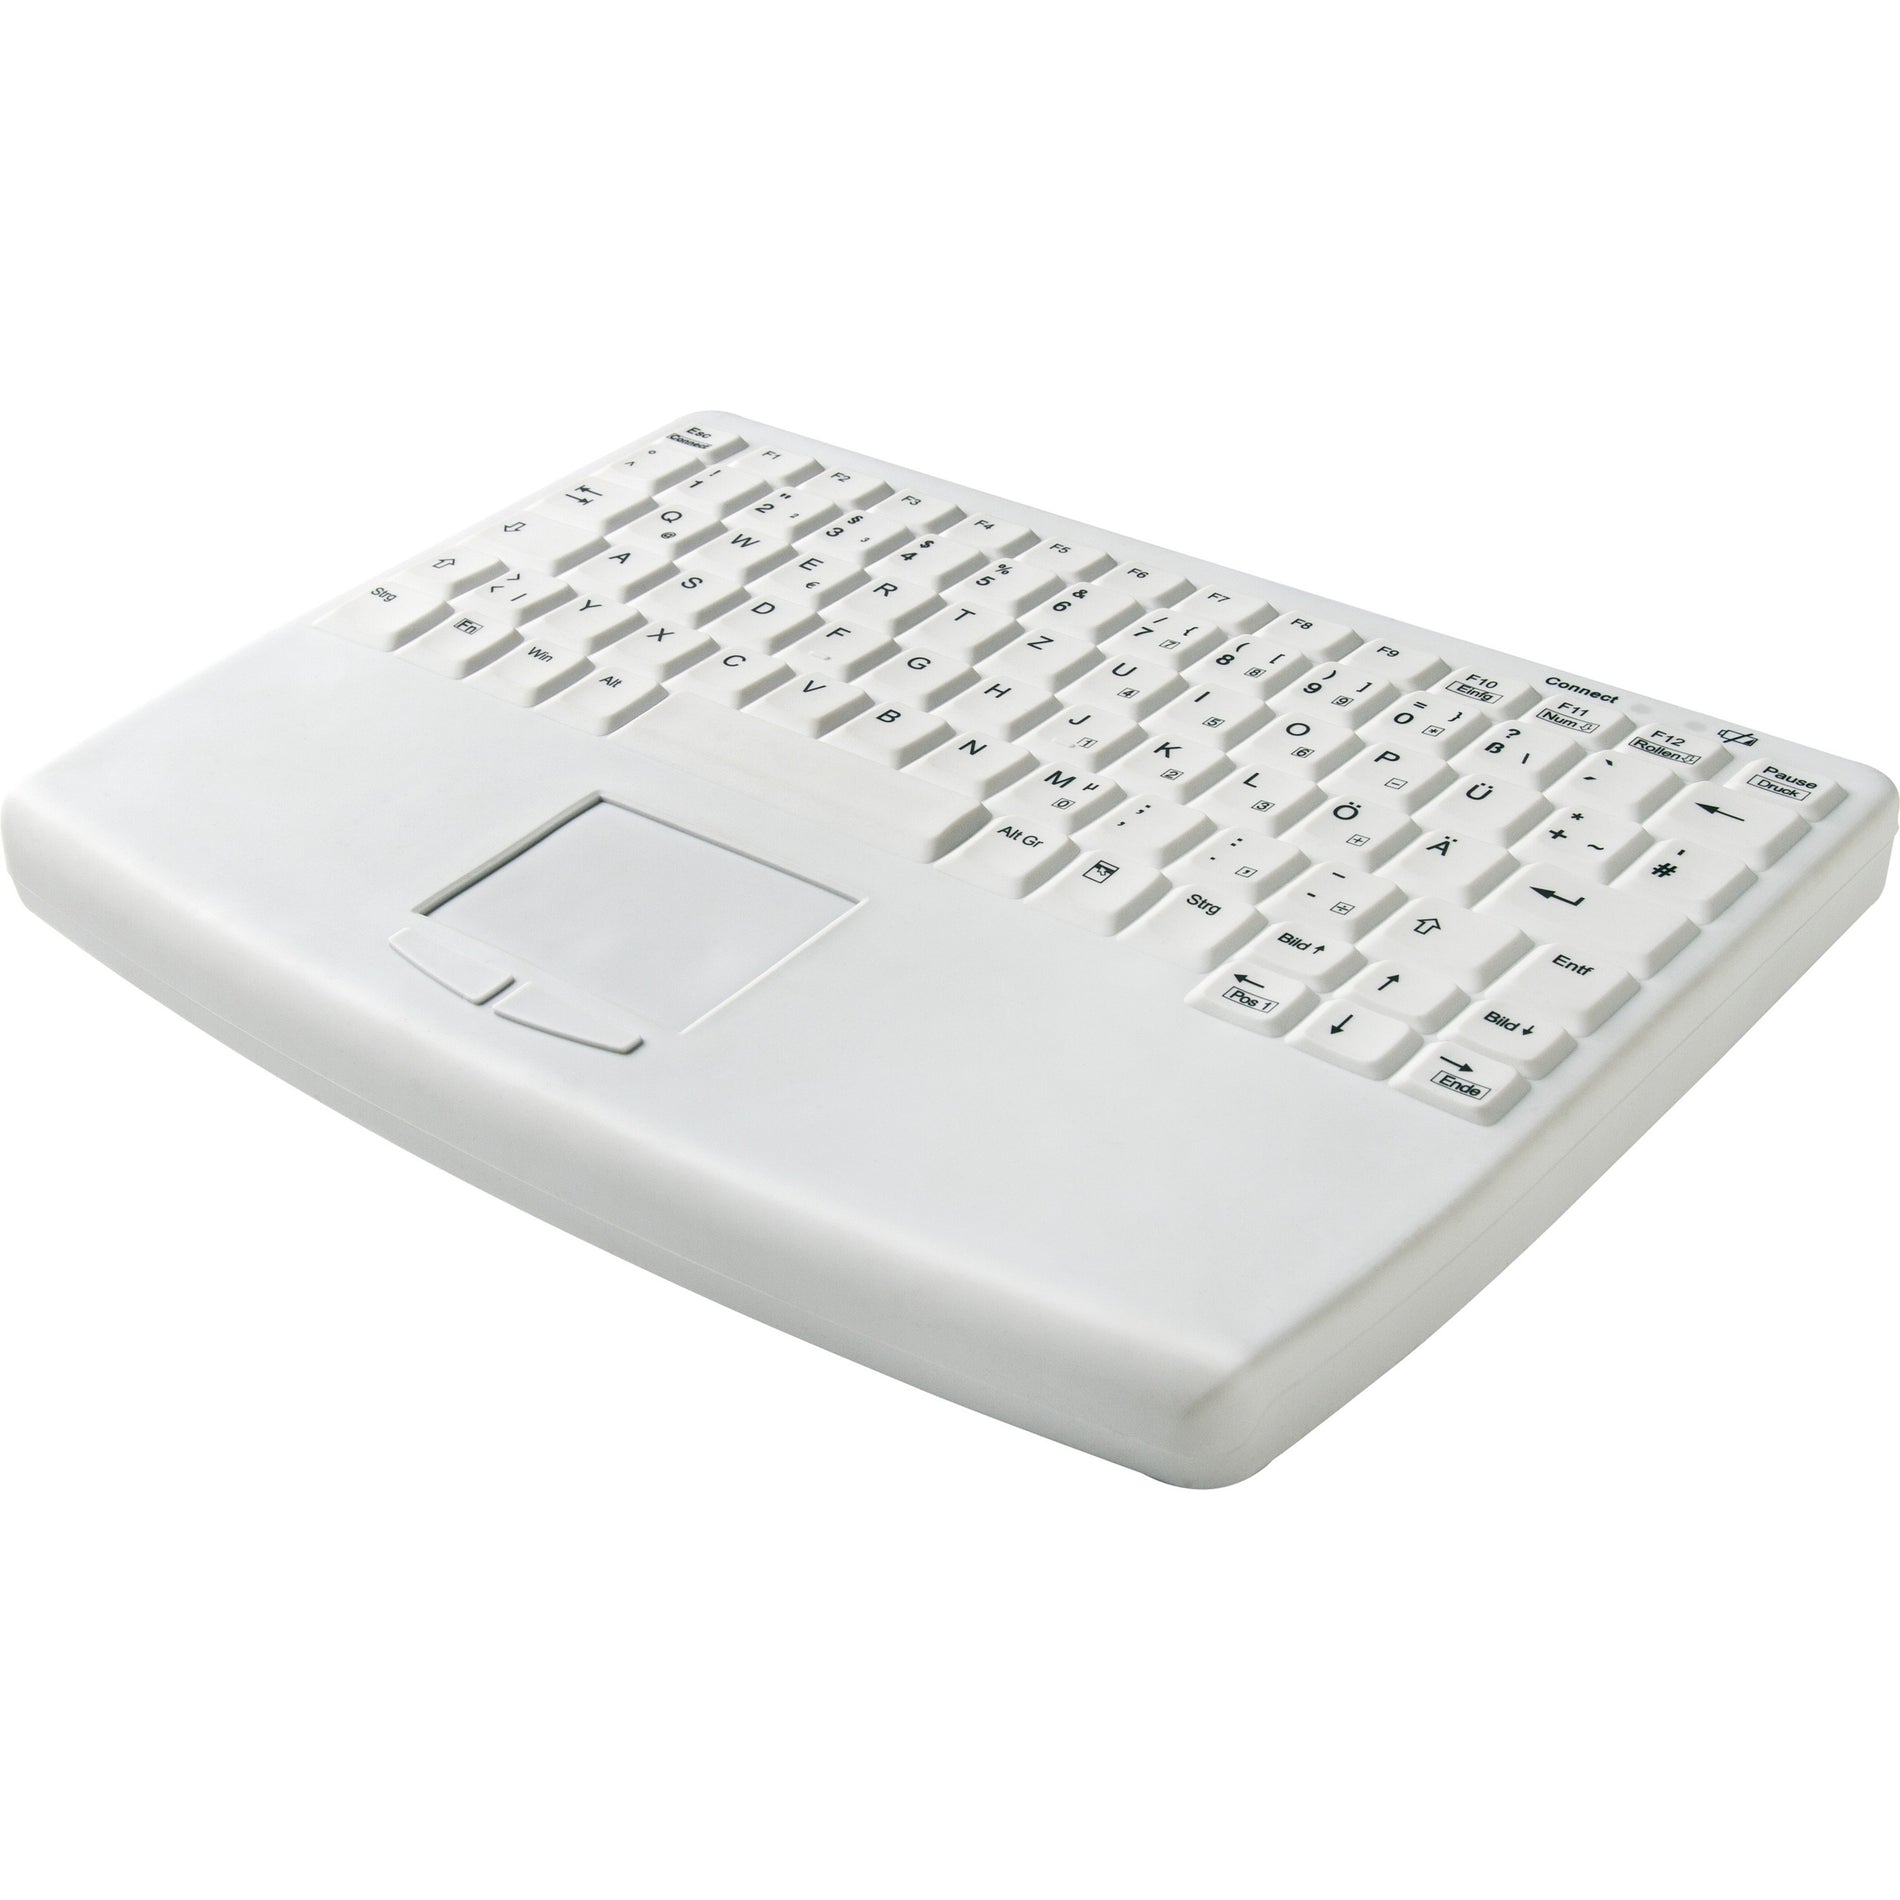 TG3 KBA-CK82S-BCWN-US CK82S Keyboard, Wireless QWERTY Scissors TouchPad, Environmentally Friendly